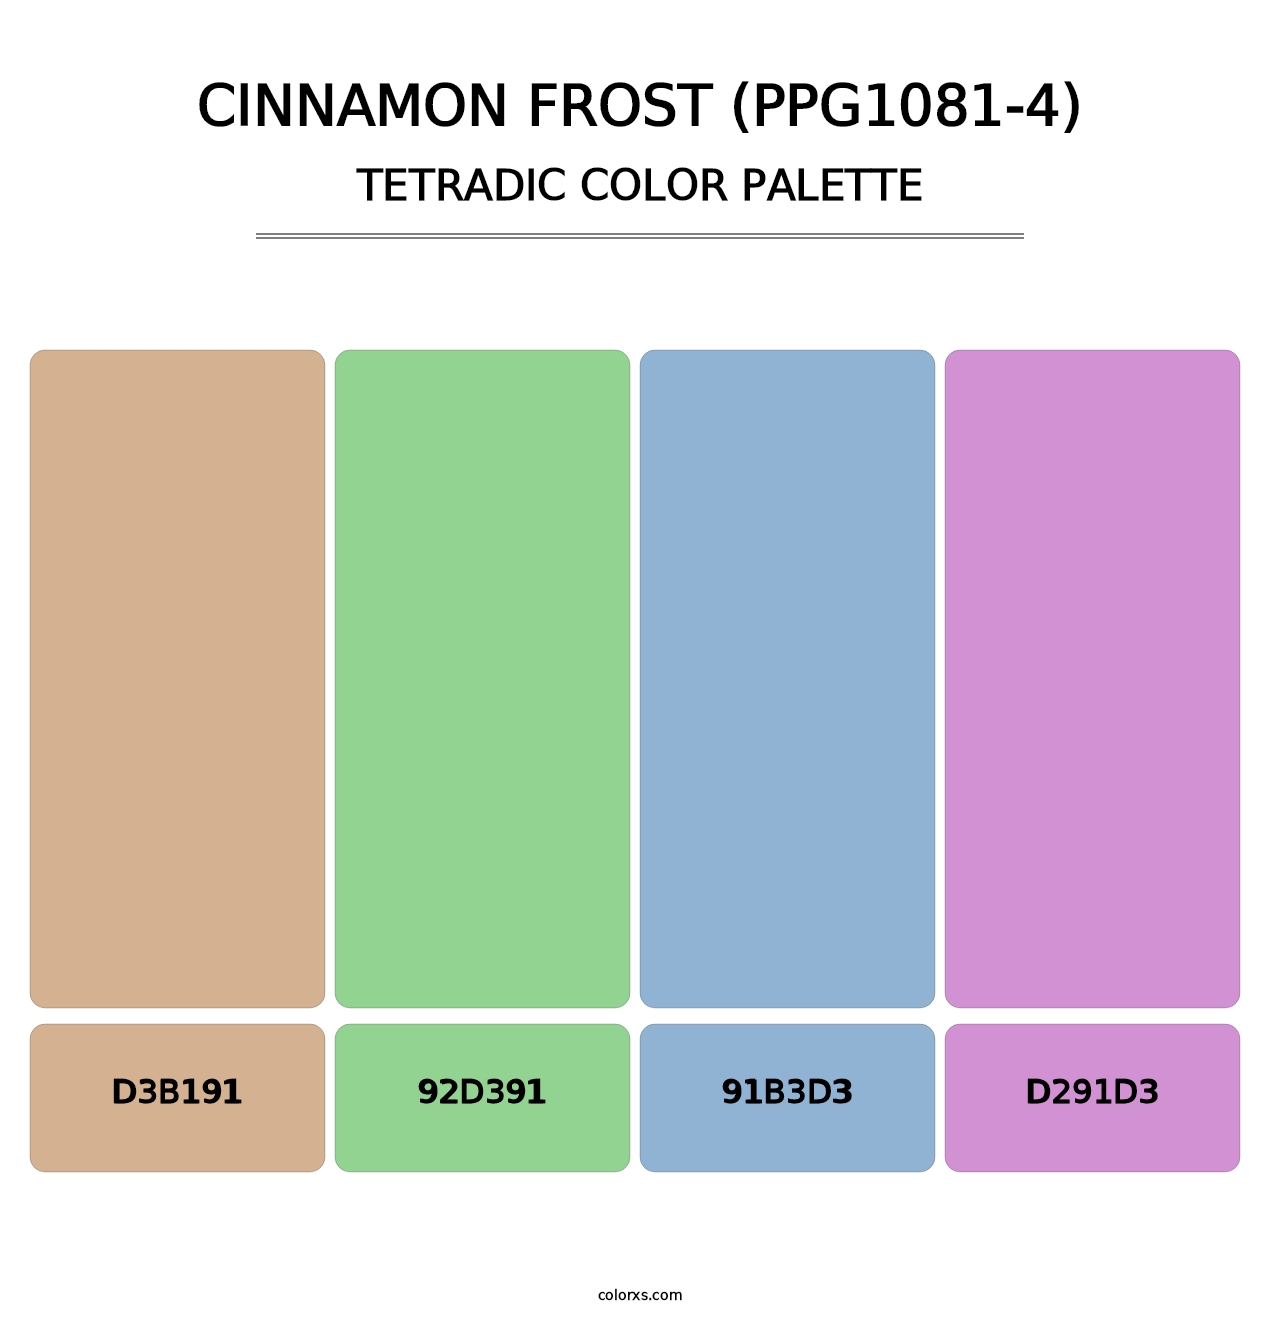 Cinnamon Frost (PPG1081-4) - Tetradic Color Palette